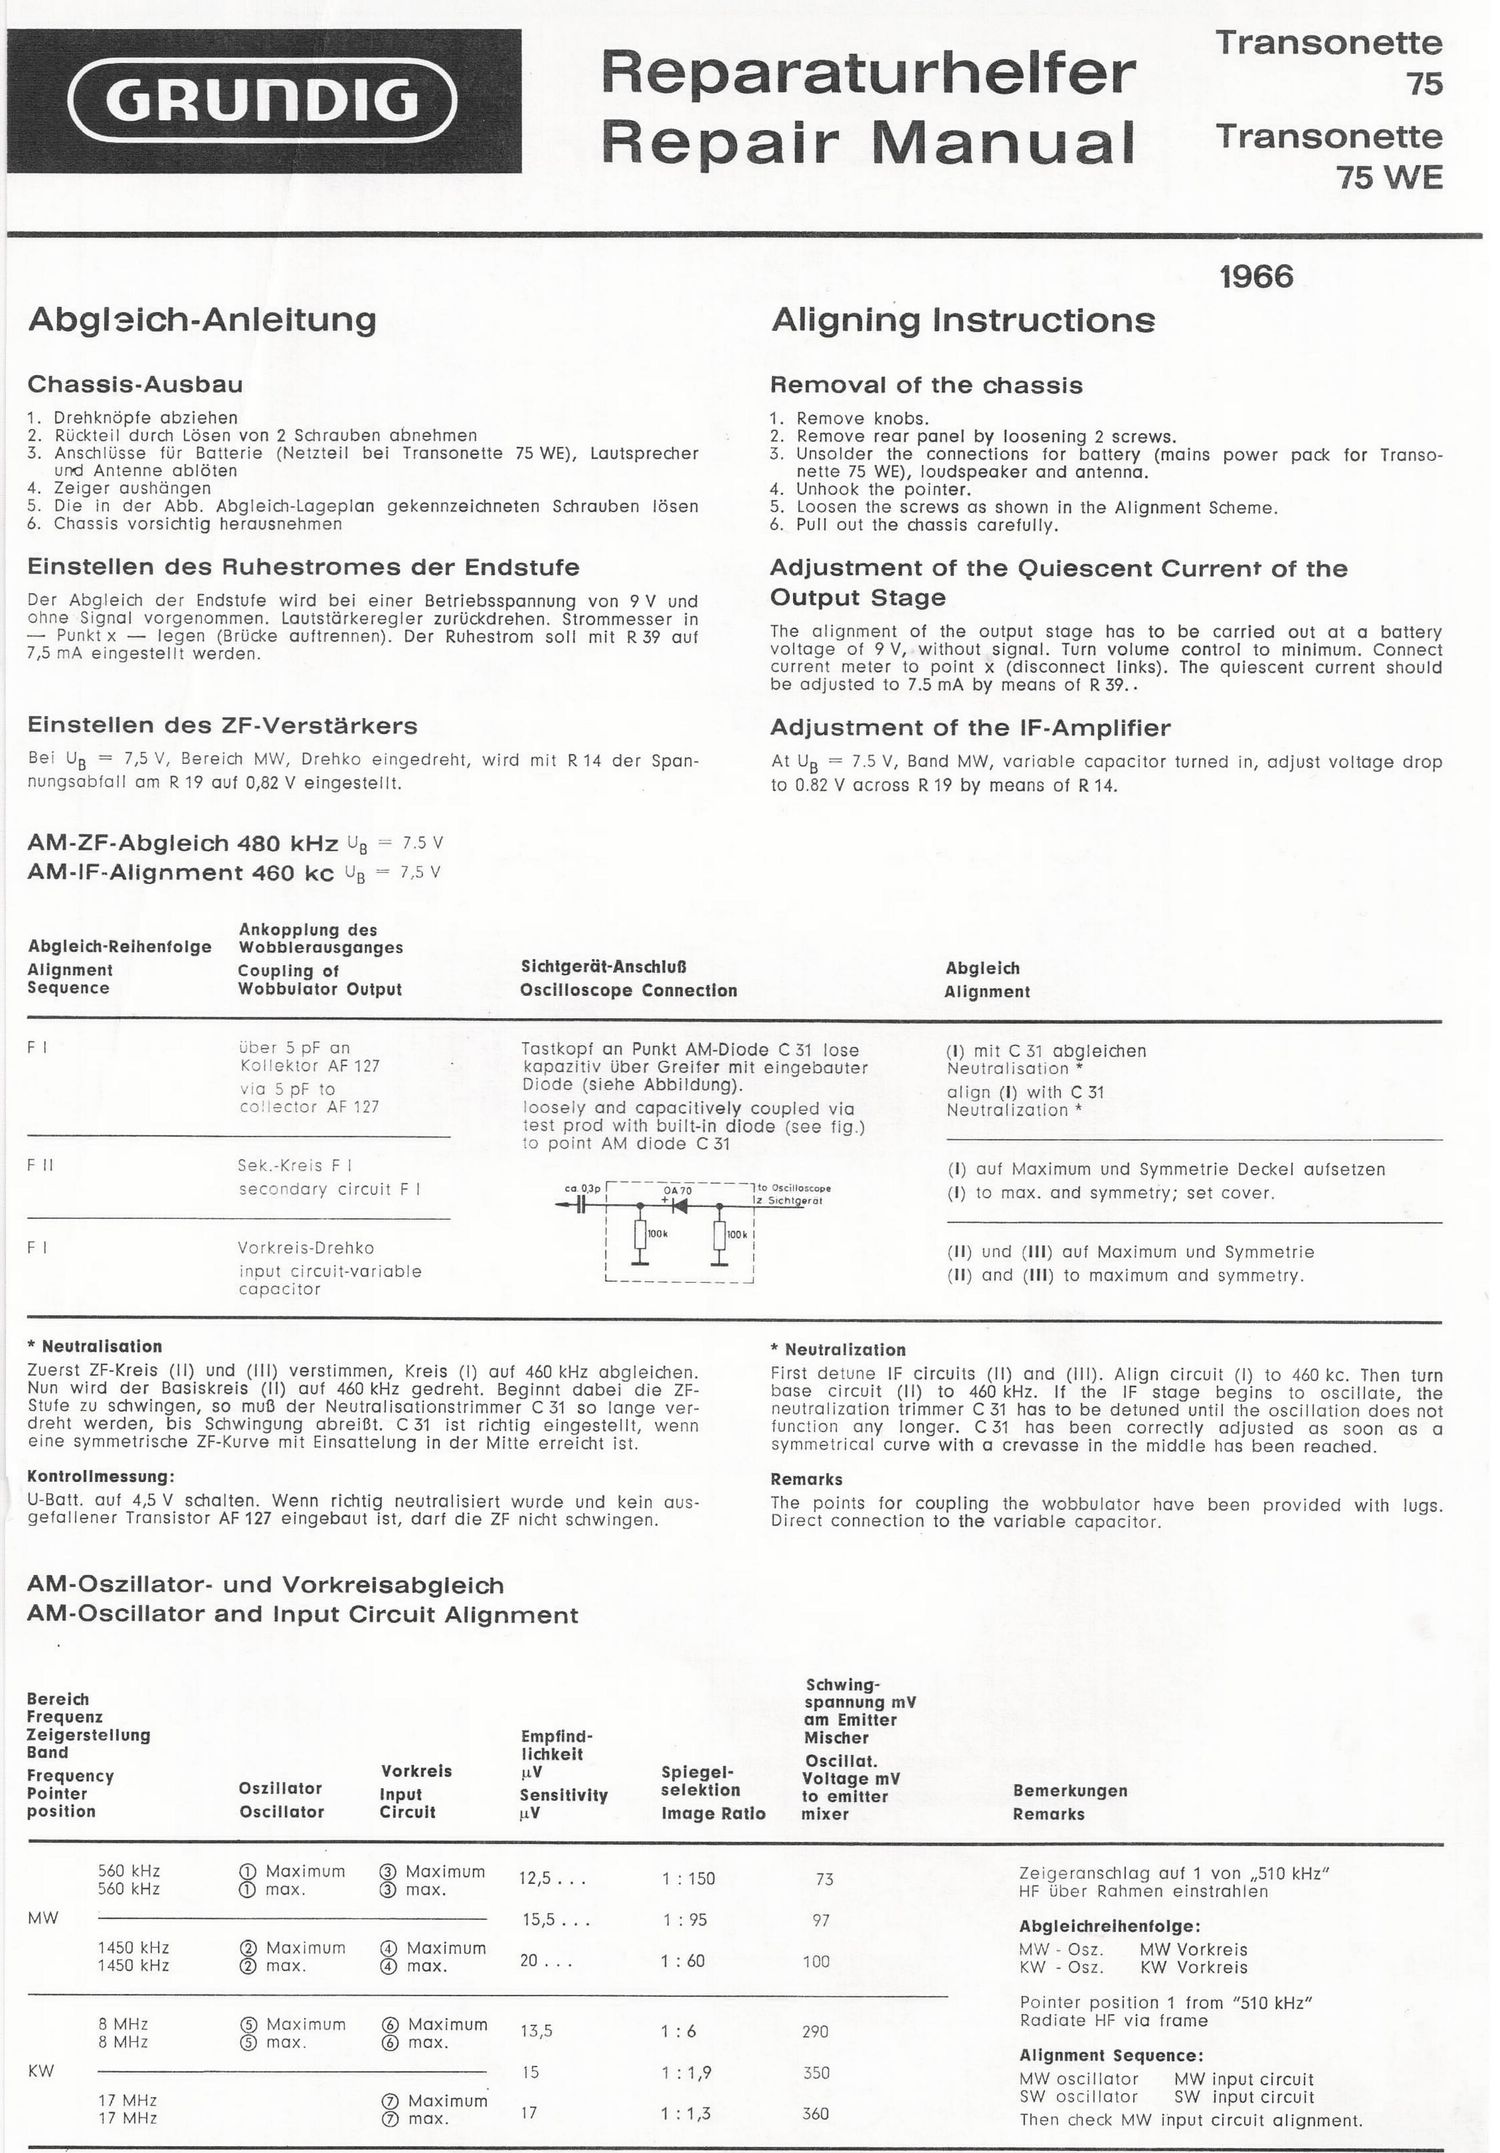 Grundig Transonette 75 WE Service Manual